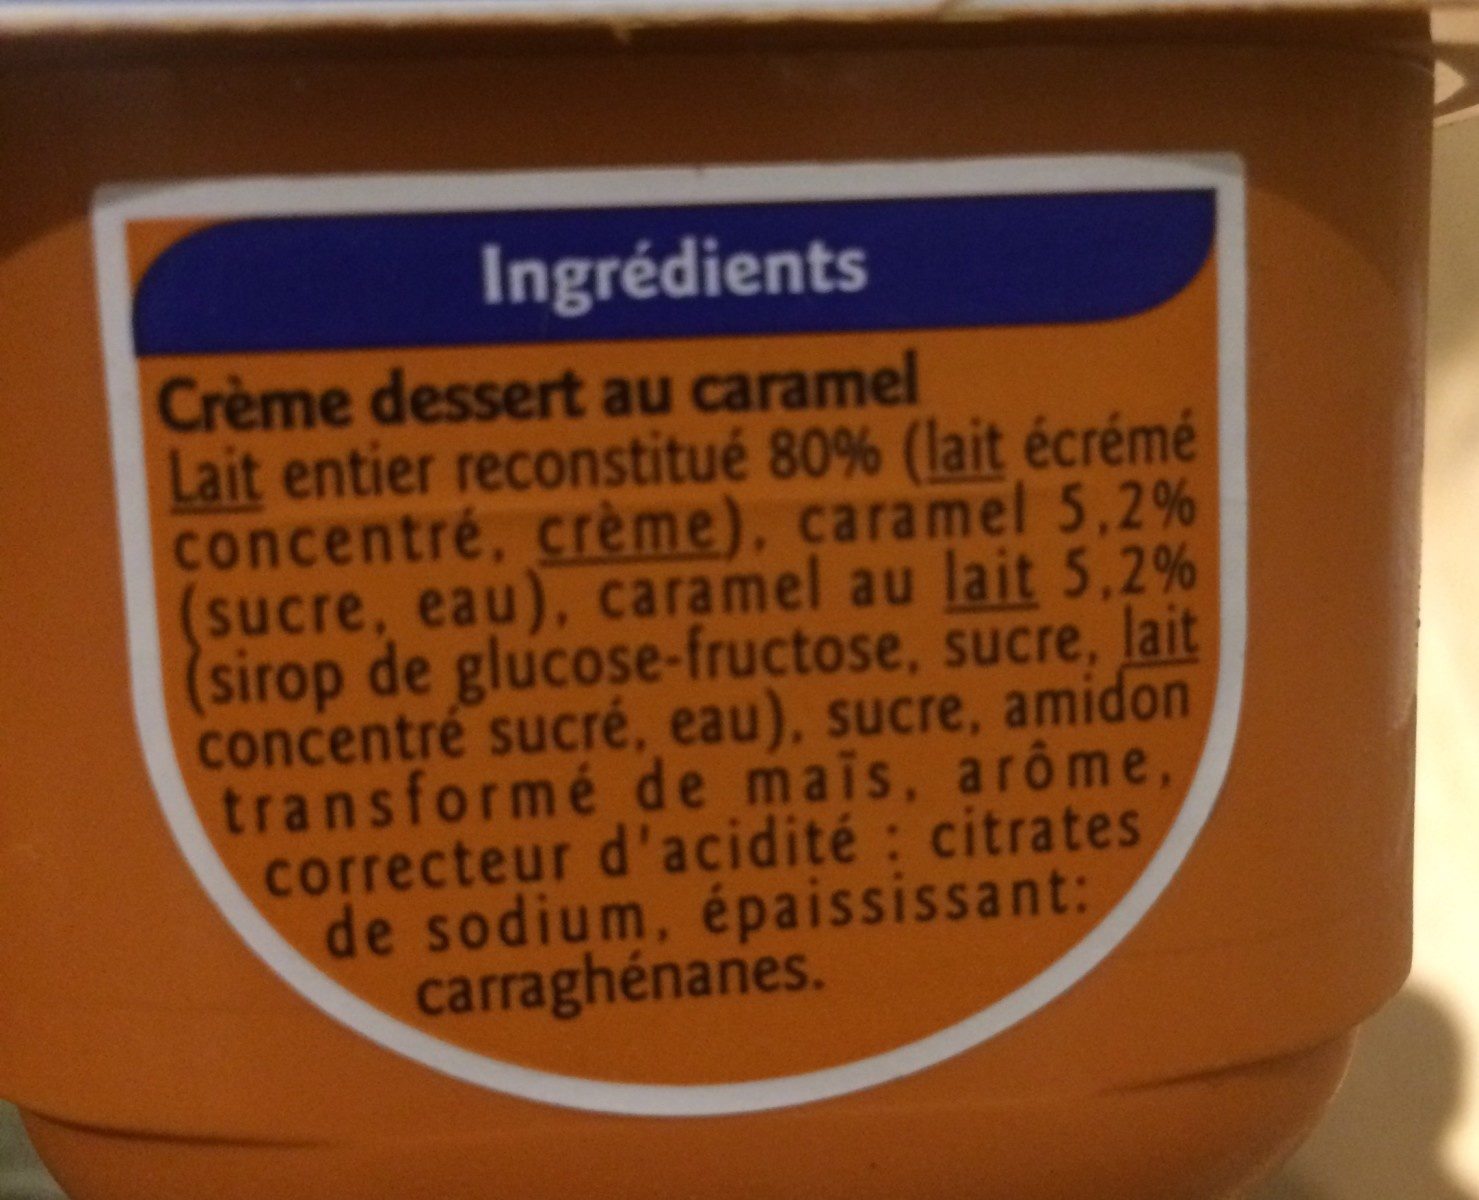 Crème dessert au caramel - Ingredients - fr